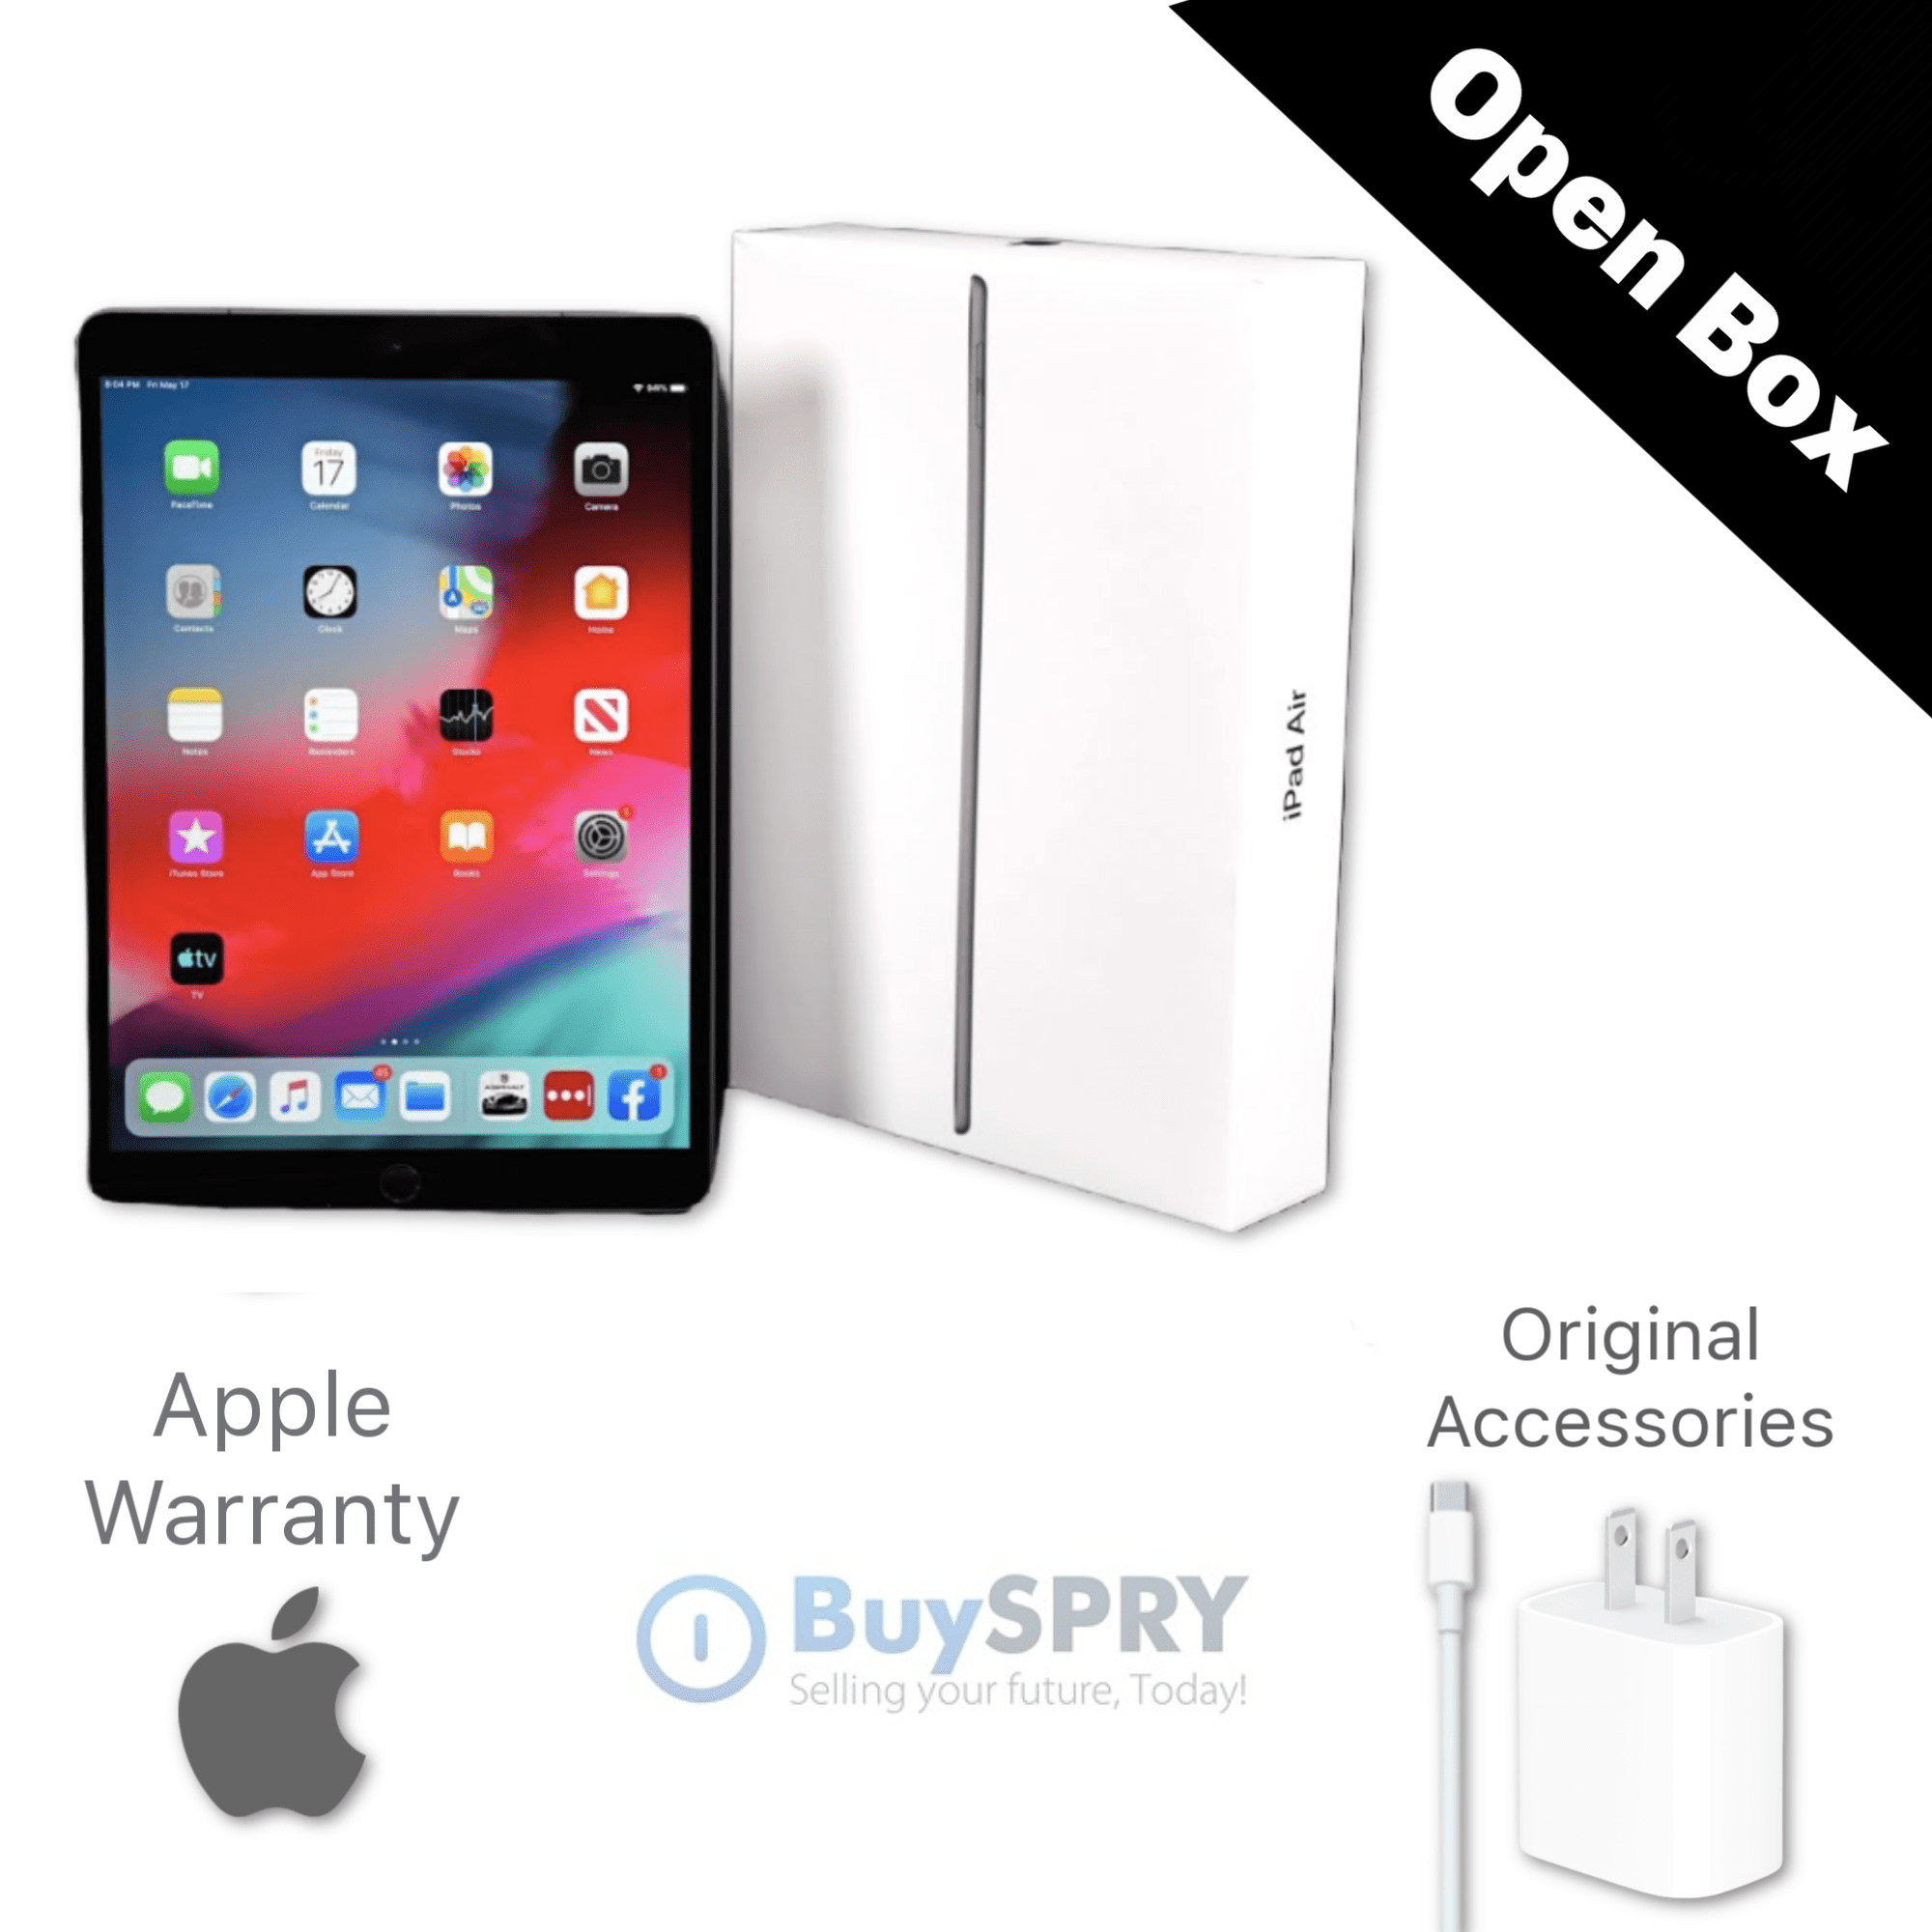 Apple iPad Air 3 10.5 (3rd Gen, 2019) WiFi Only 256GB Gold MUUT2LL/A - Open  Box